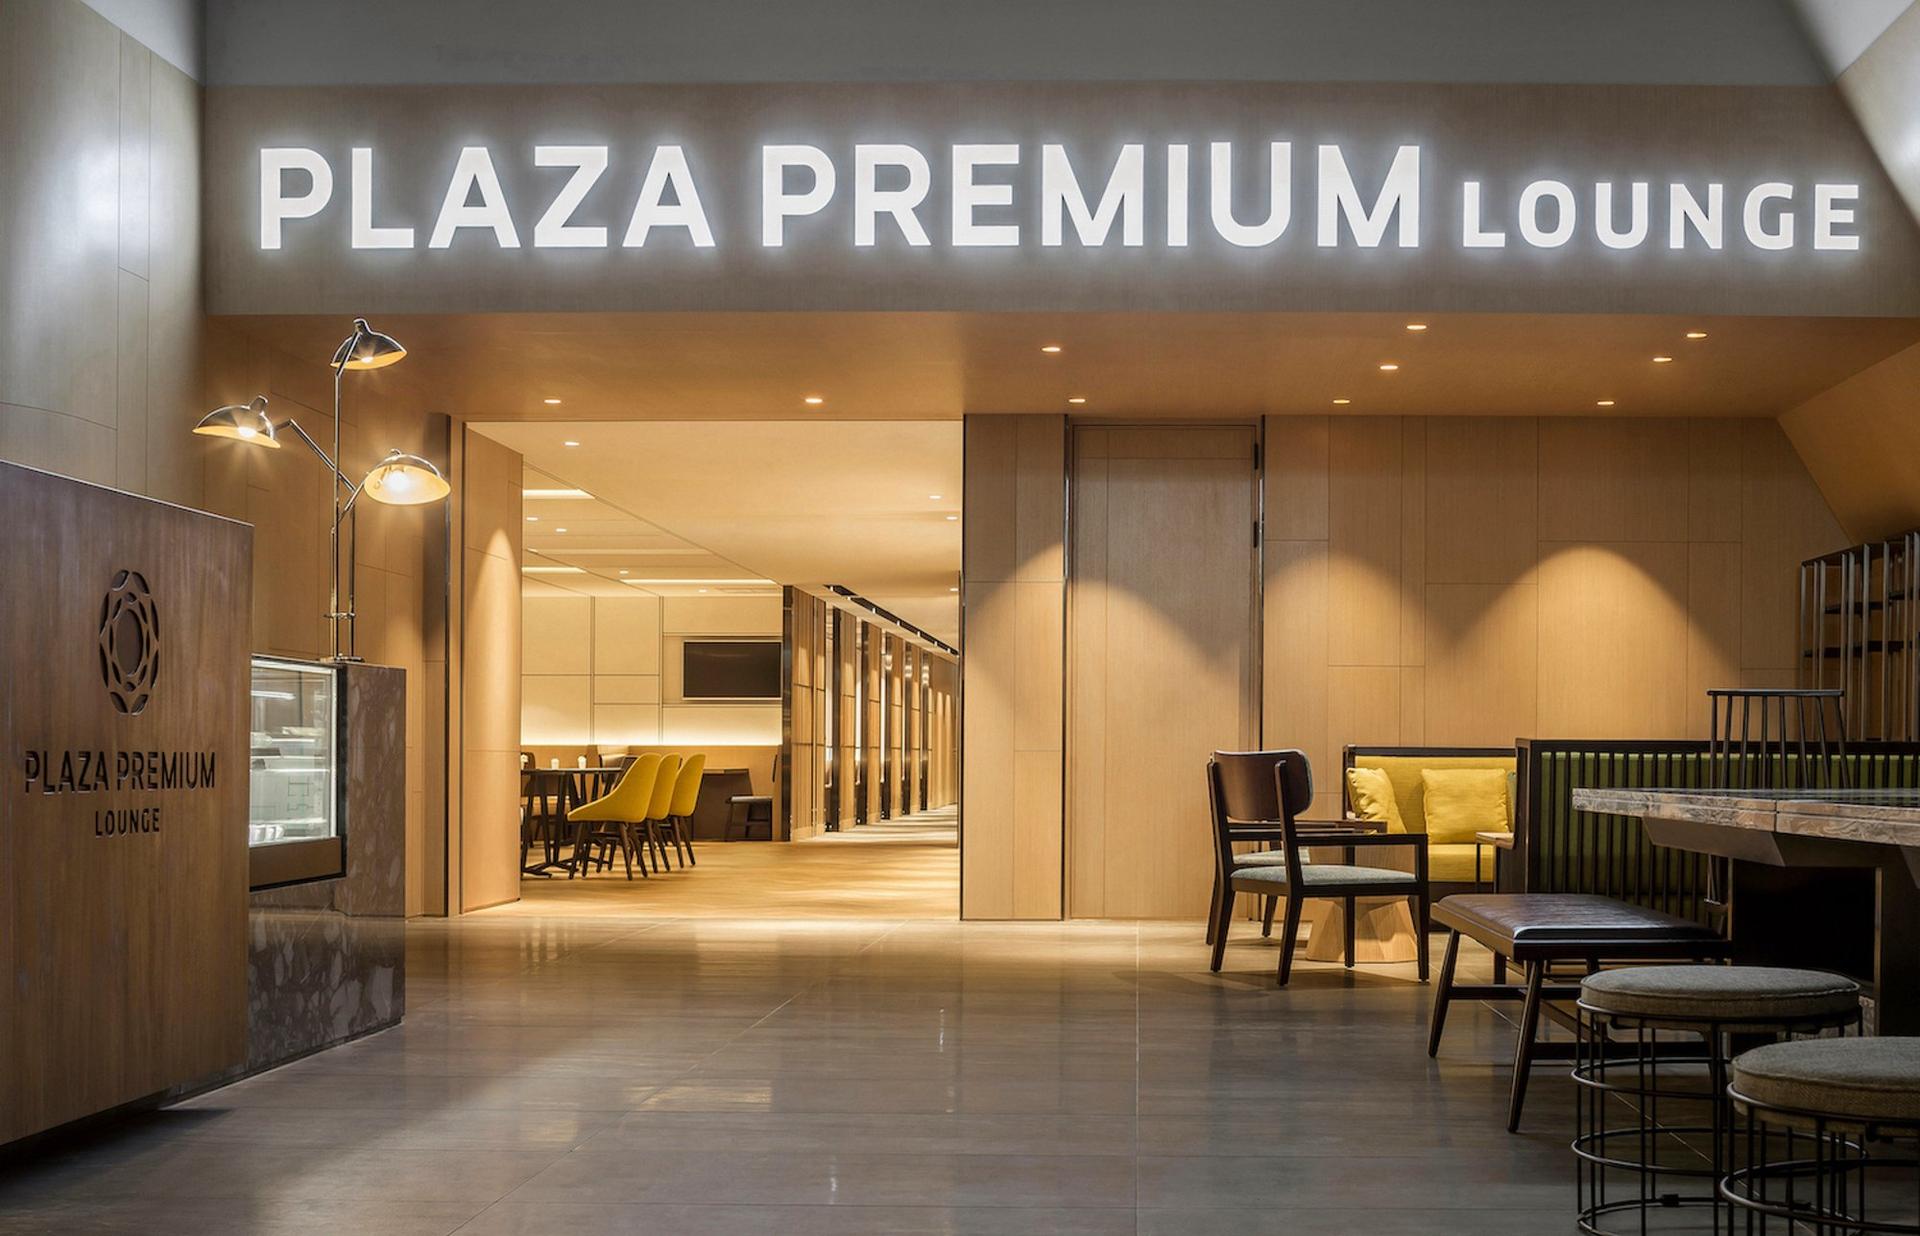 Plaza Premium Lounge (Zone A) image 64 of 99